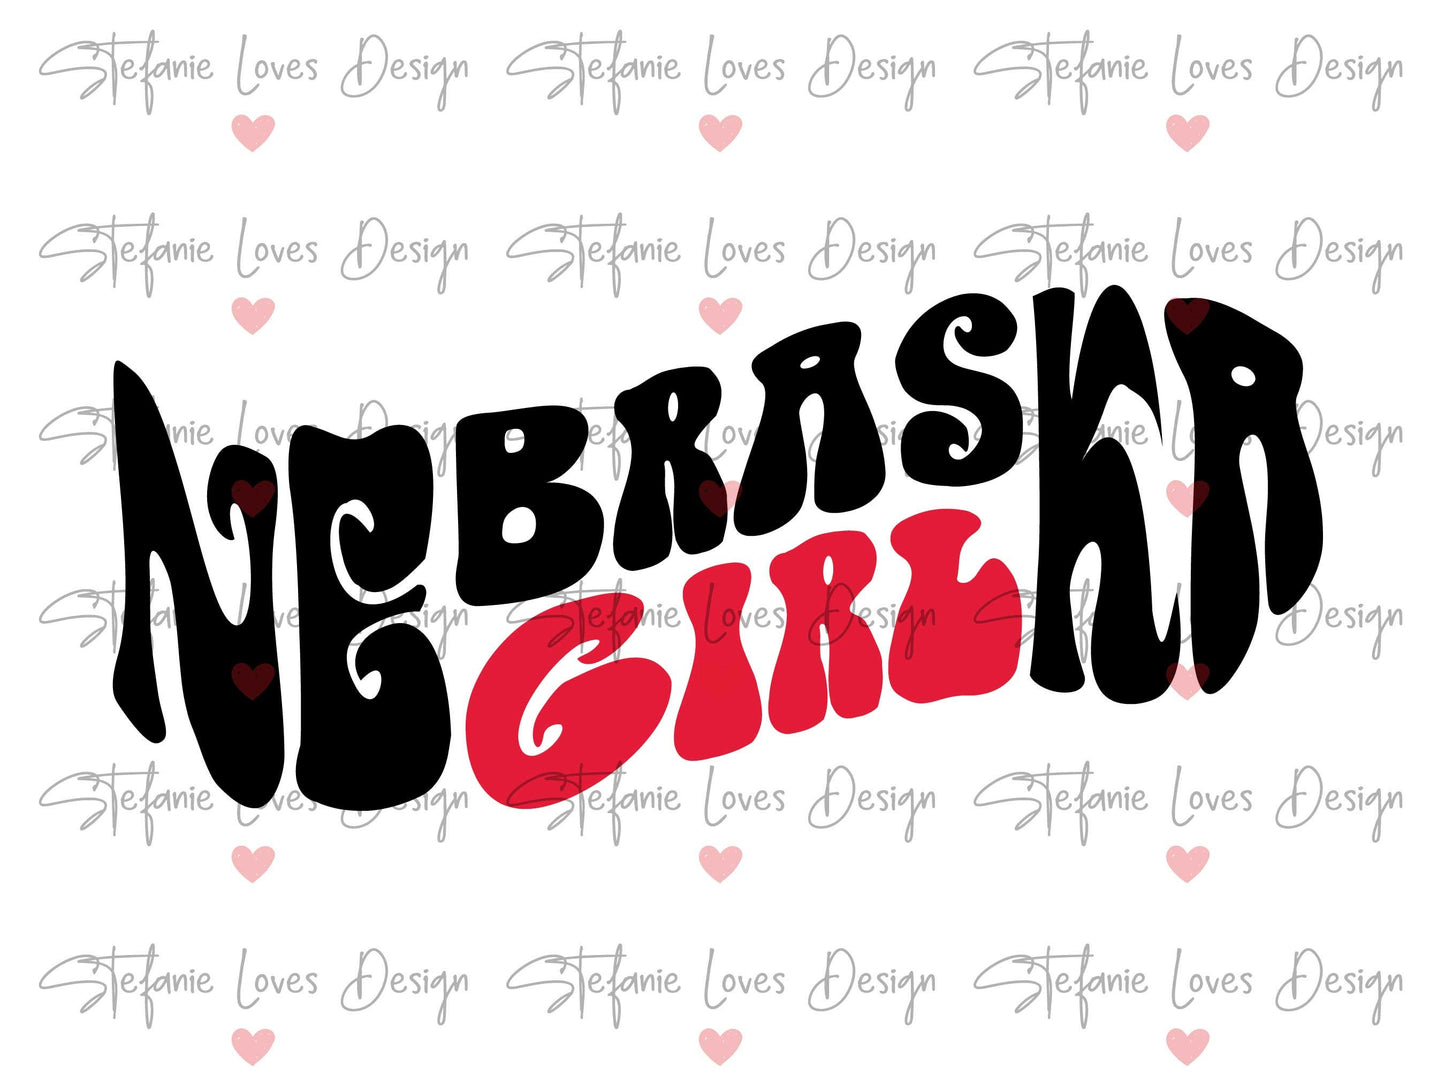 Nebraska Girl vg, Nebraska svg, Nebraska Girl png, Nebraska Retro Wavy Letters svg, Digital Design